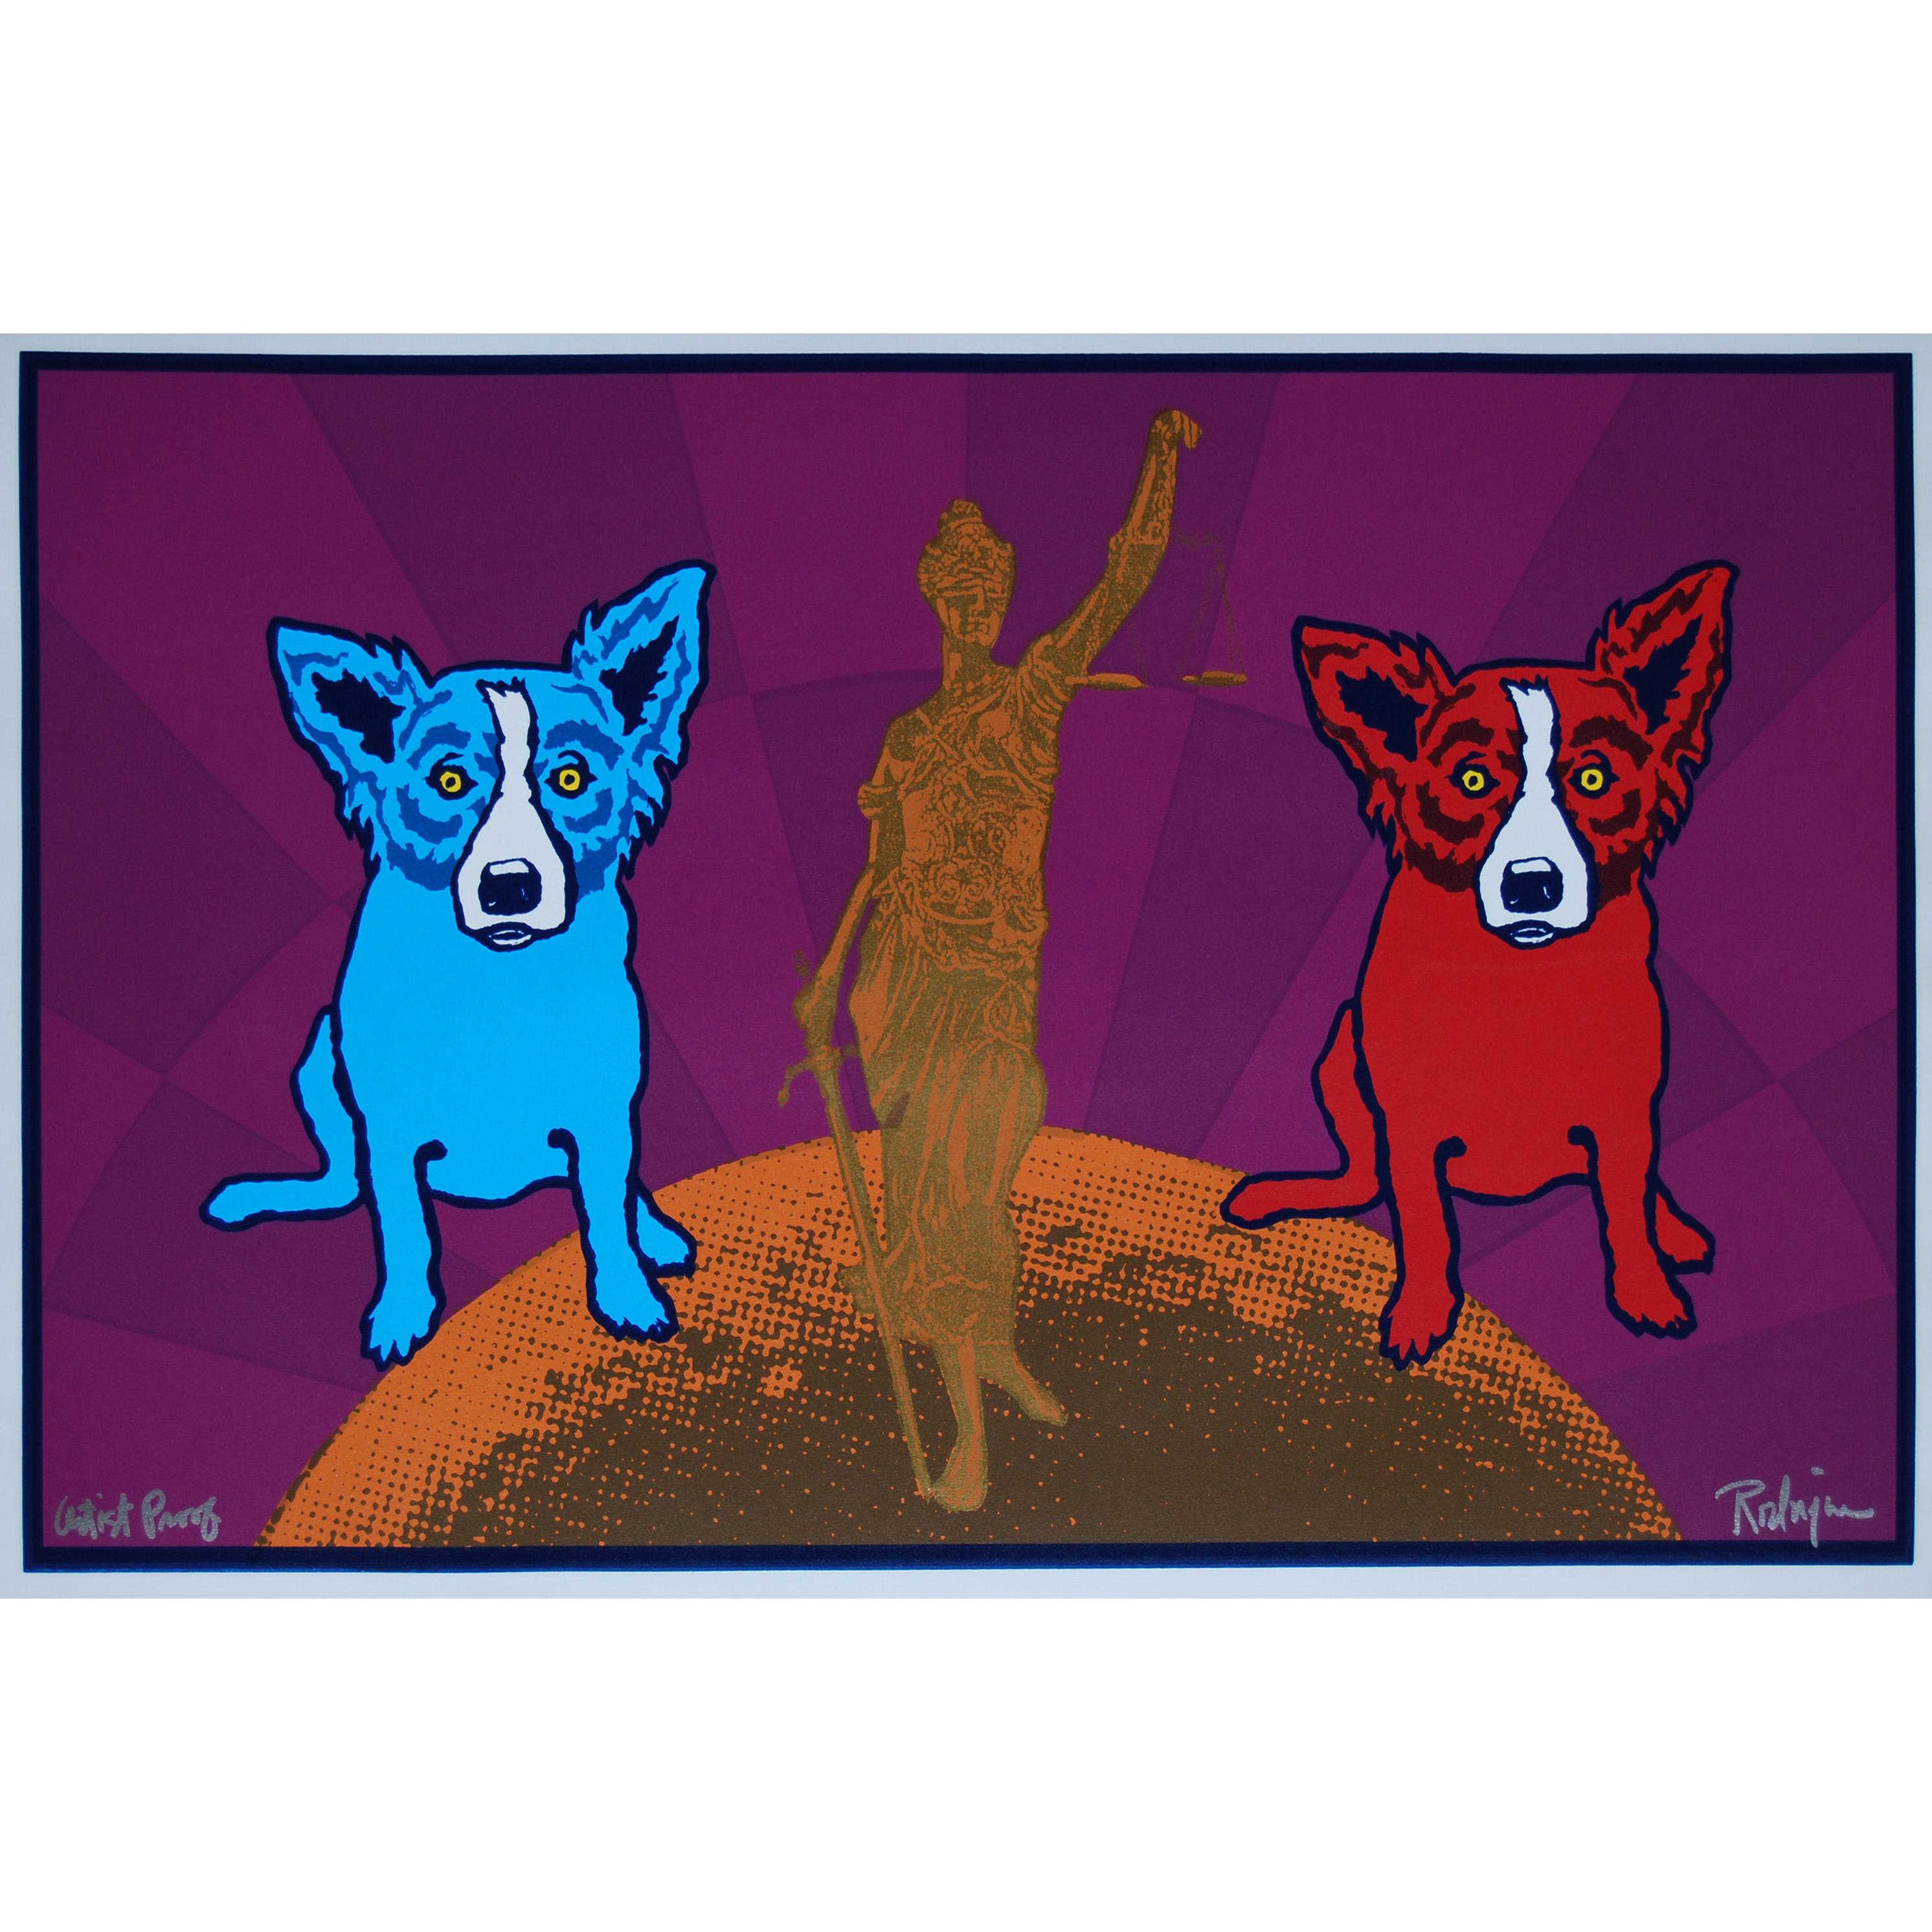 George Rodrigue Animal Print - Equal Justice Pink - Signed Silkscreen Print - Blue Dog